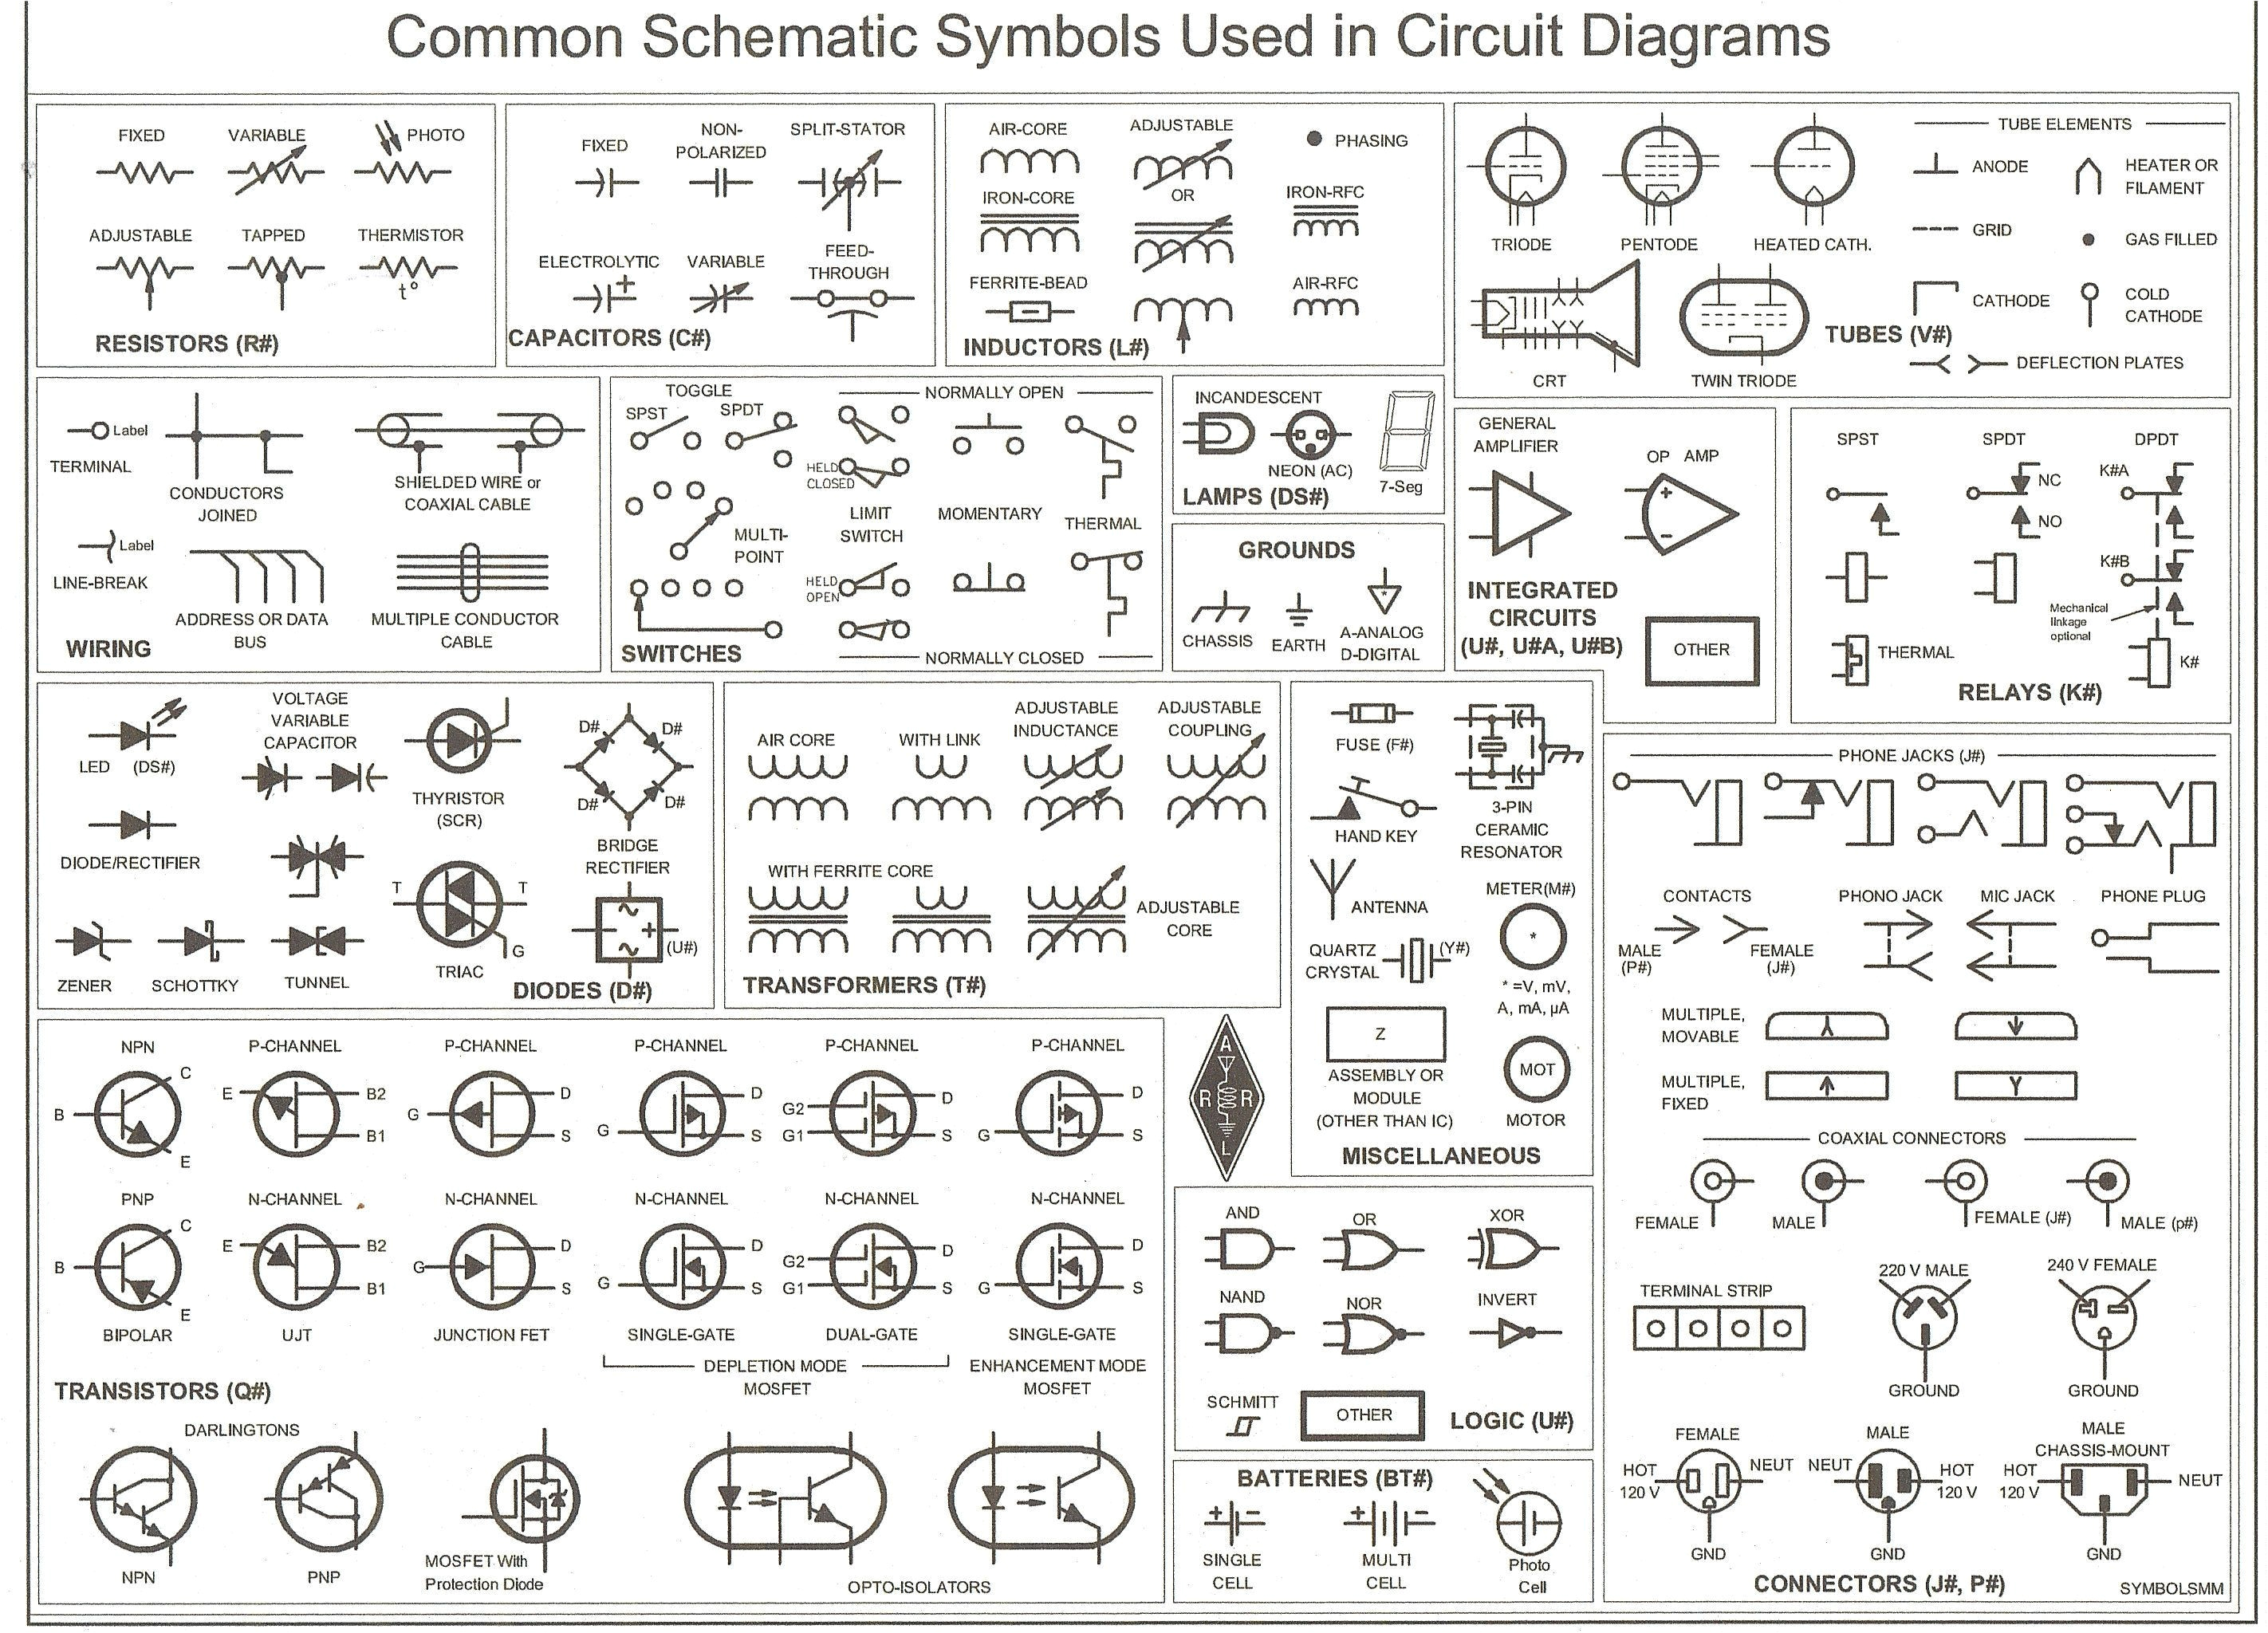 symbols common schematic symbols used in circuit diagrams darren common electronic schematic symbols common schematic symbols